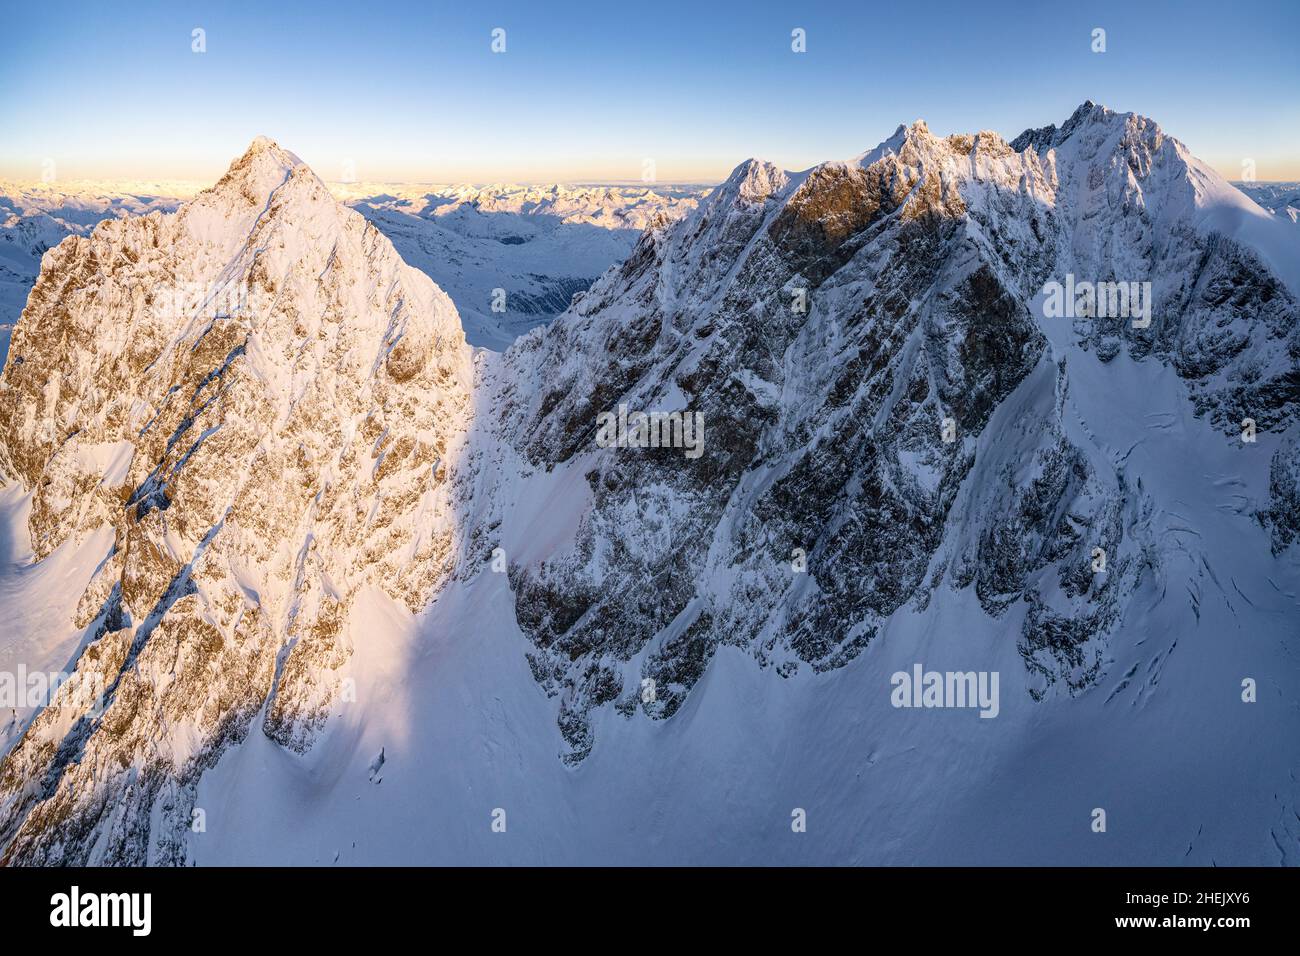 Panoramica aerea di Piz Roseg, Piz Scerscen, Piz Bernina coperta di neve, Valmalenco, Valtellina, Lombardia, Italia Foto Stock